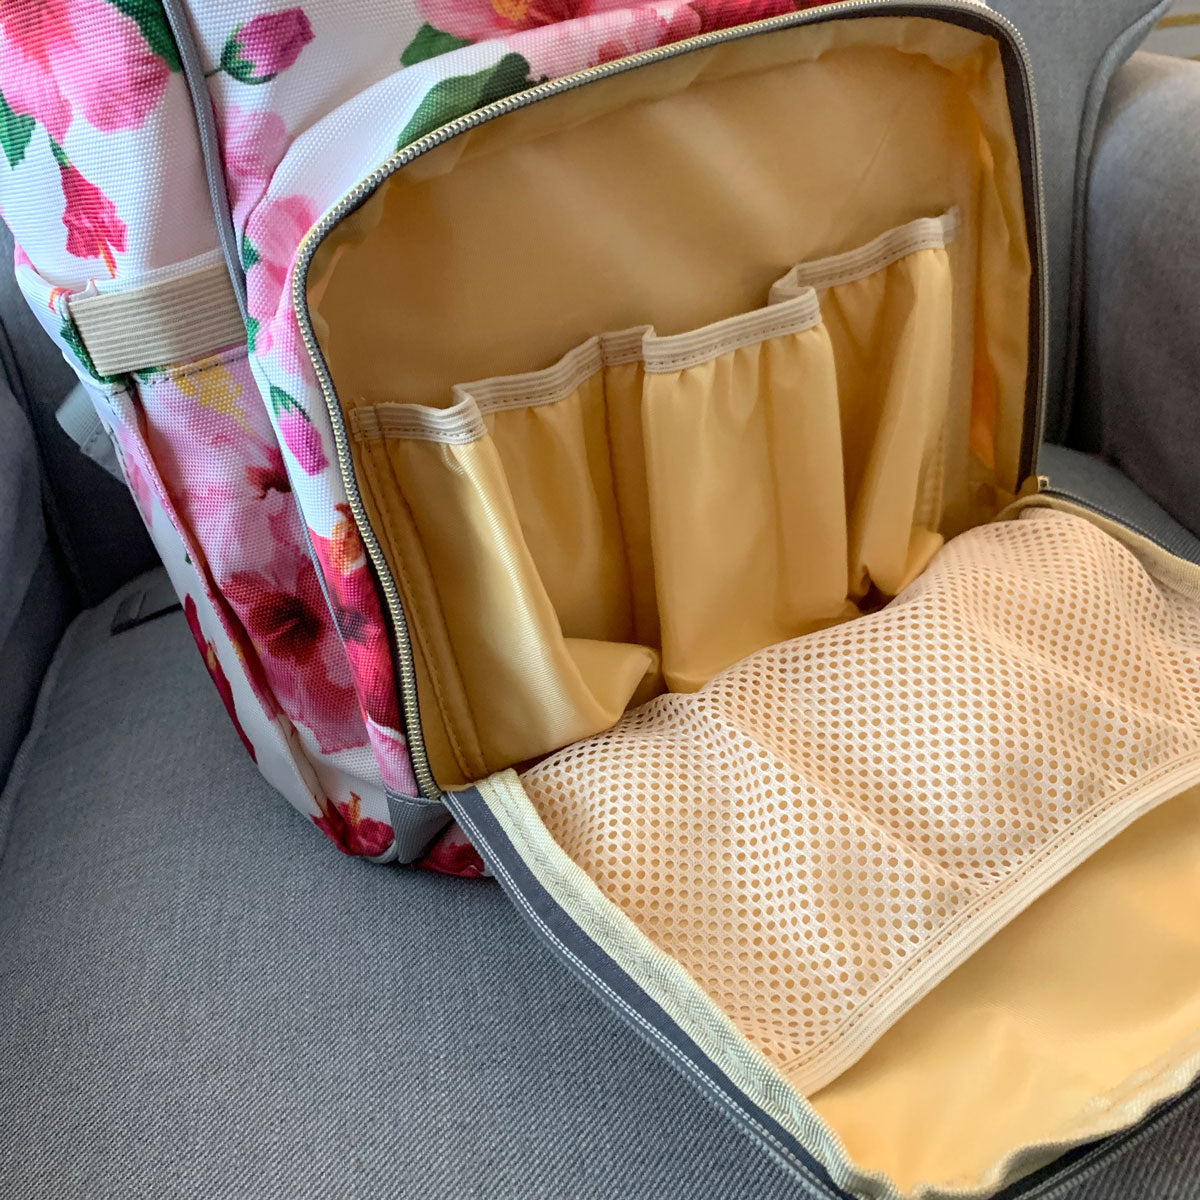 Latte Stone Pink Hibiscus Guam CNMI Multi-Function Baby Diaper Backpack Bag